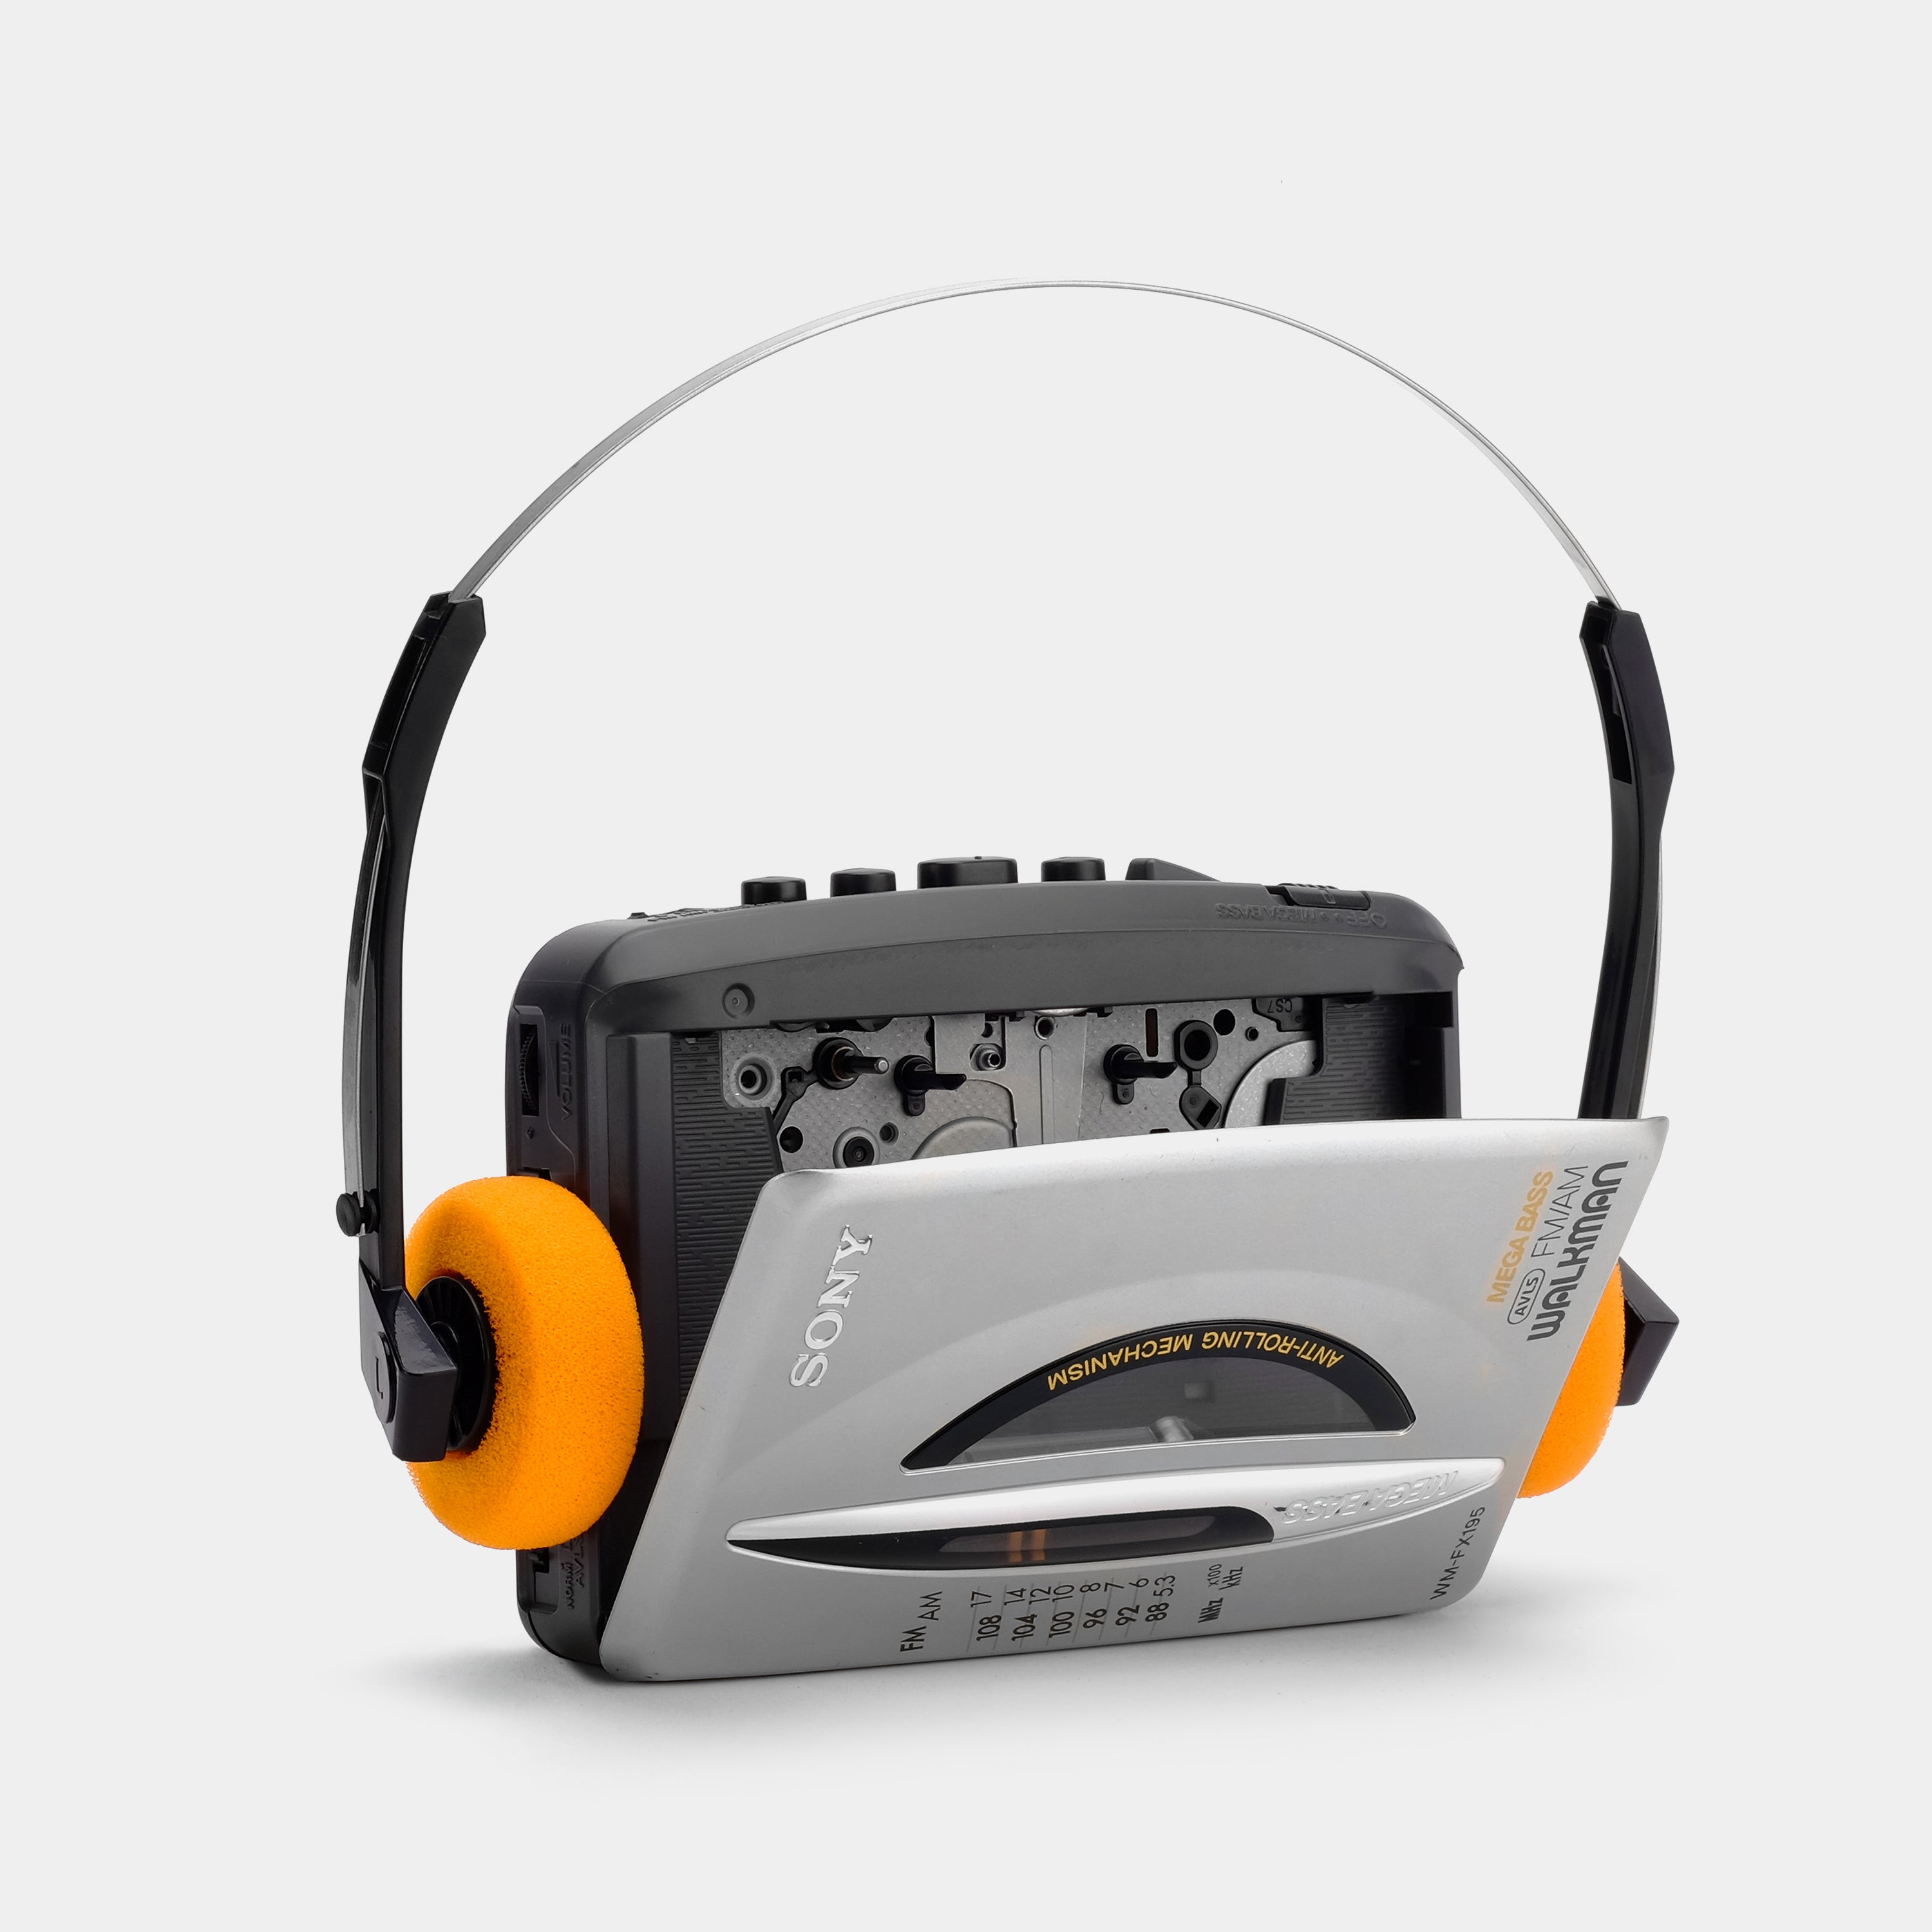 Sony Walkman AM/FM Cassette Player w/ Headphones WM-FX355 Tested-Works